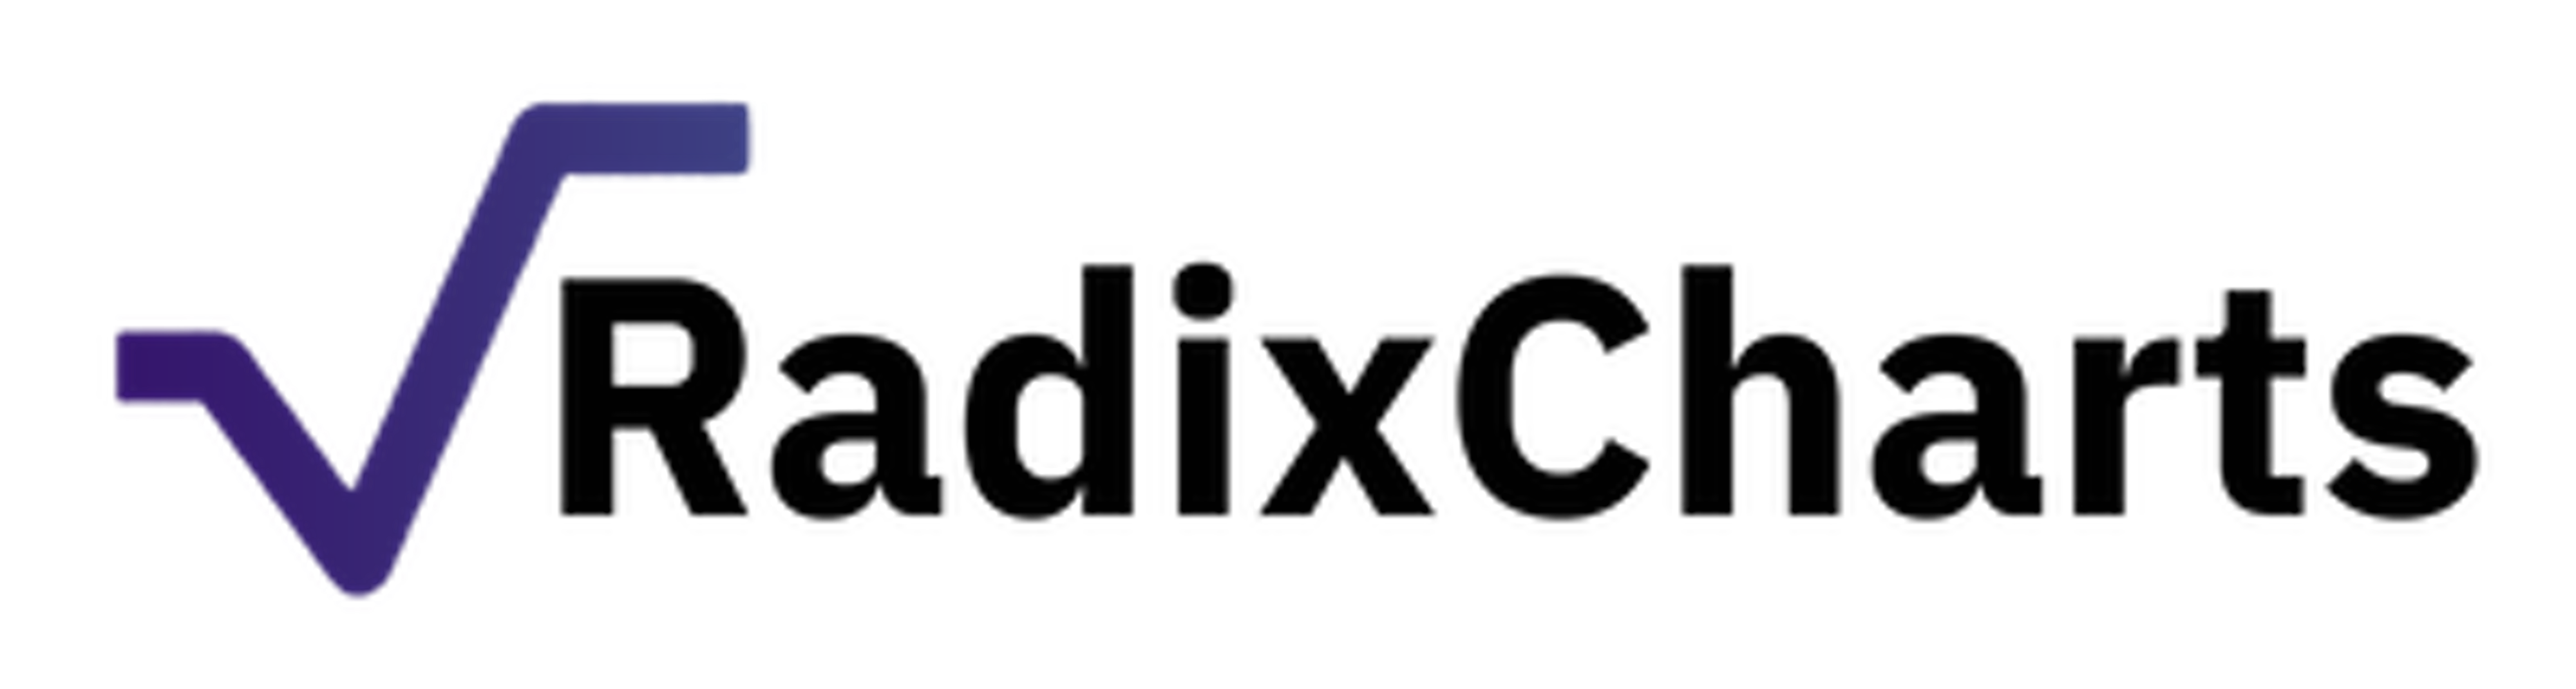 Radix Charts logo